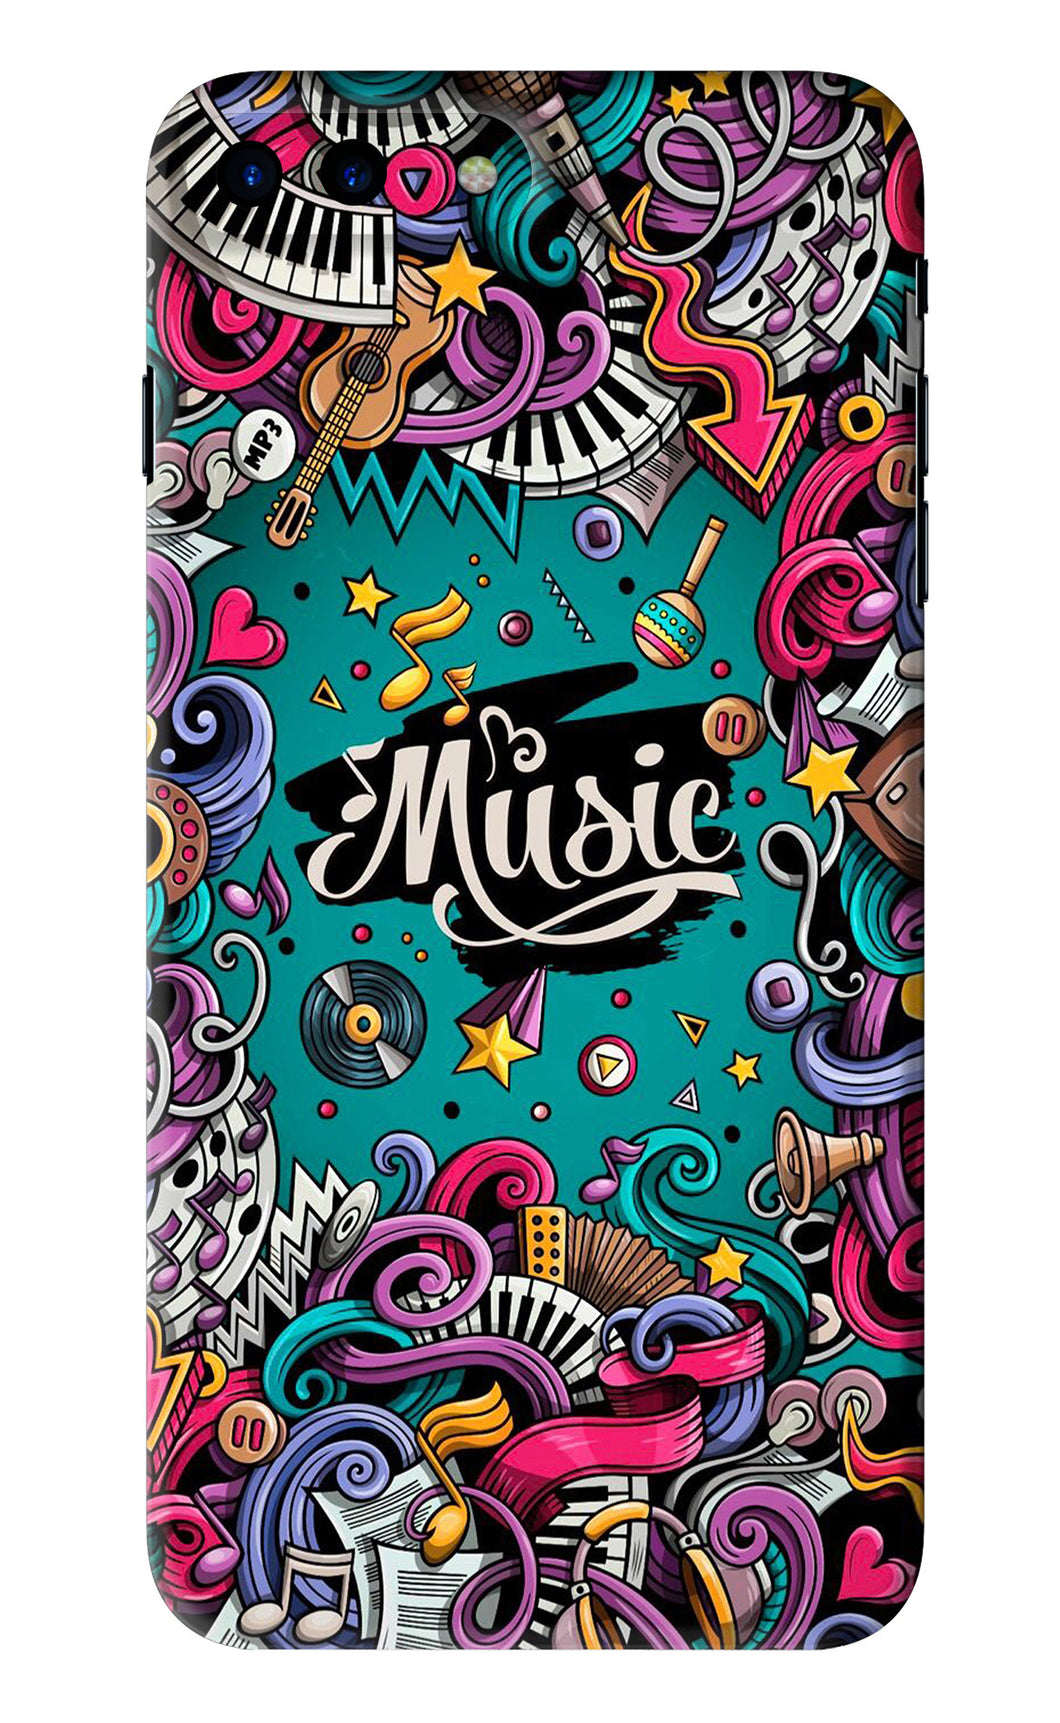 Music Graffiti iPhone 7 Plus Back Skin Wrap